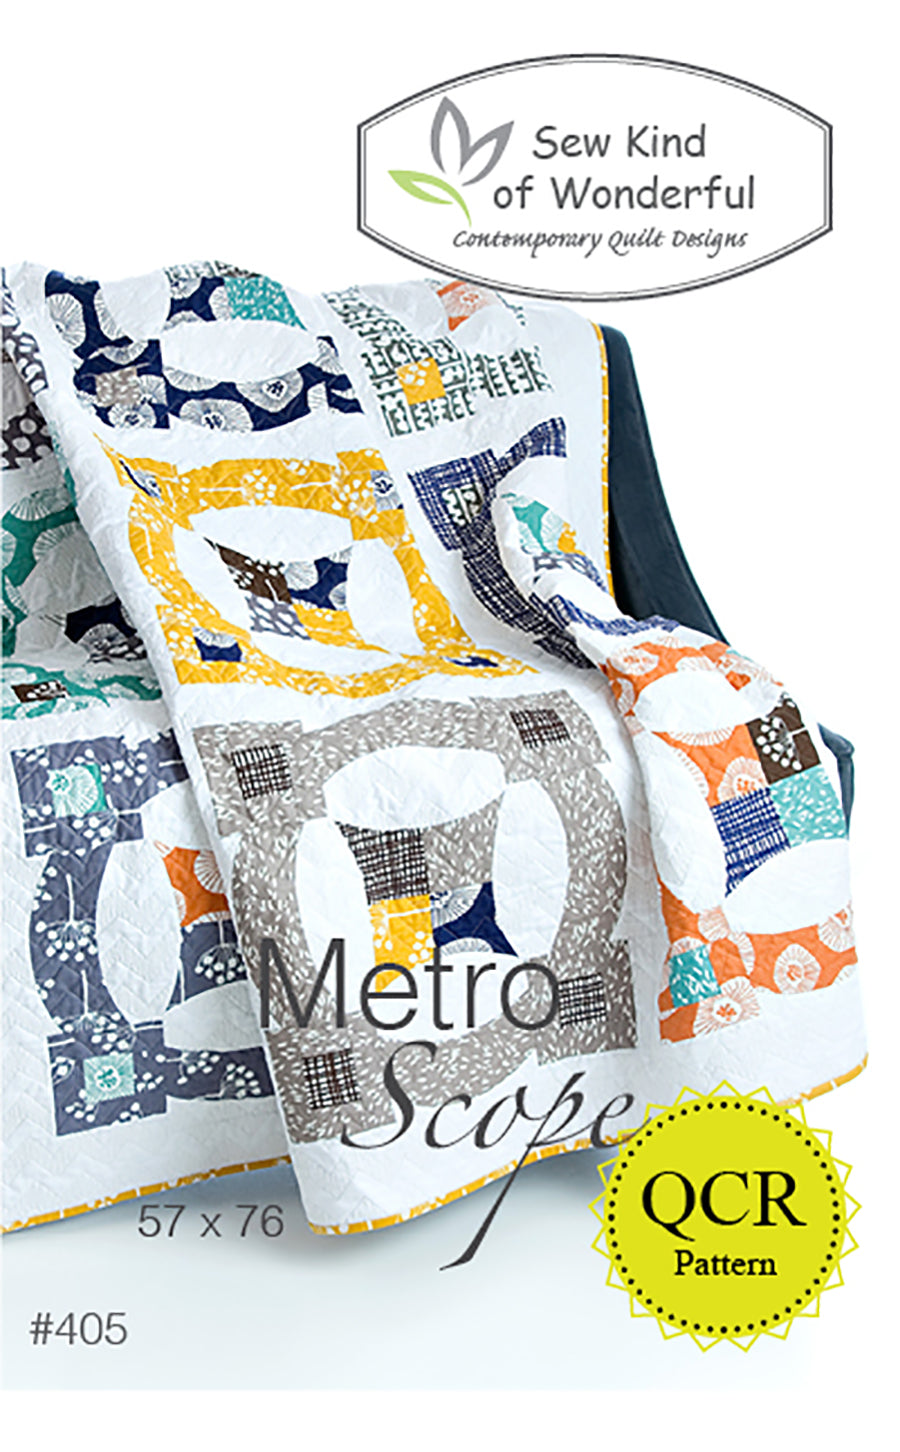 Metro Scope Quilt Pattern by Jenny Pedigo of Sew Kind of Wonderful